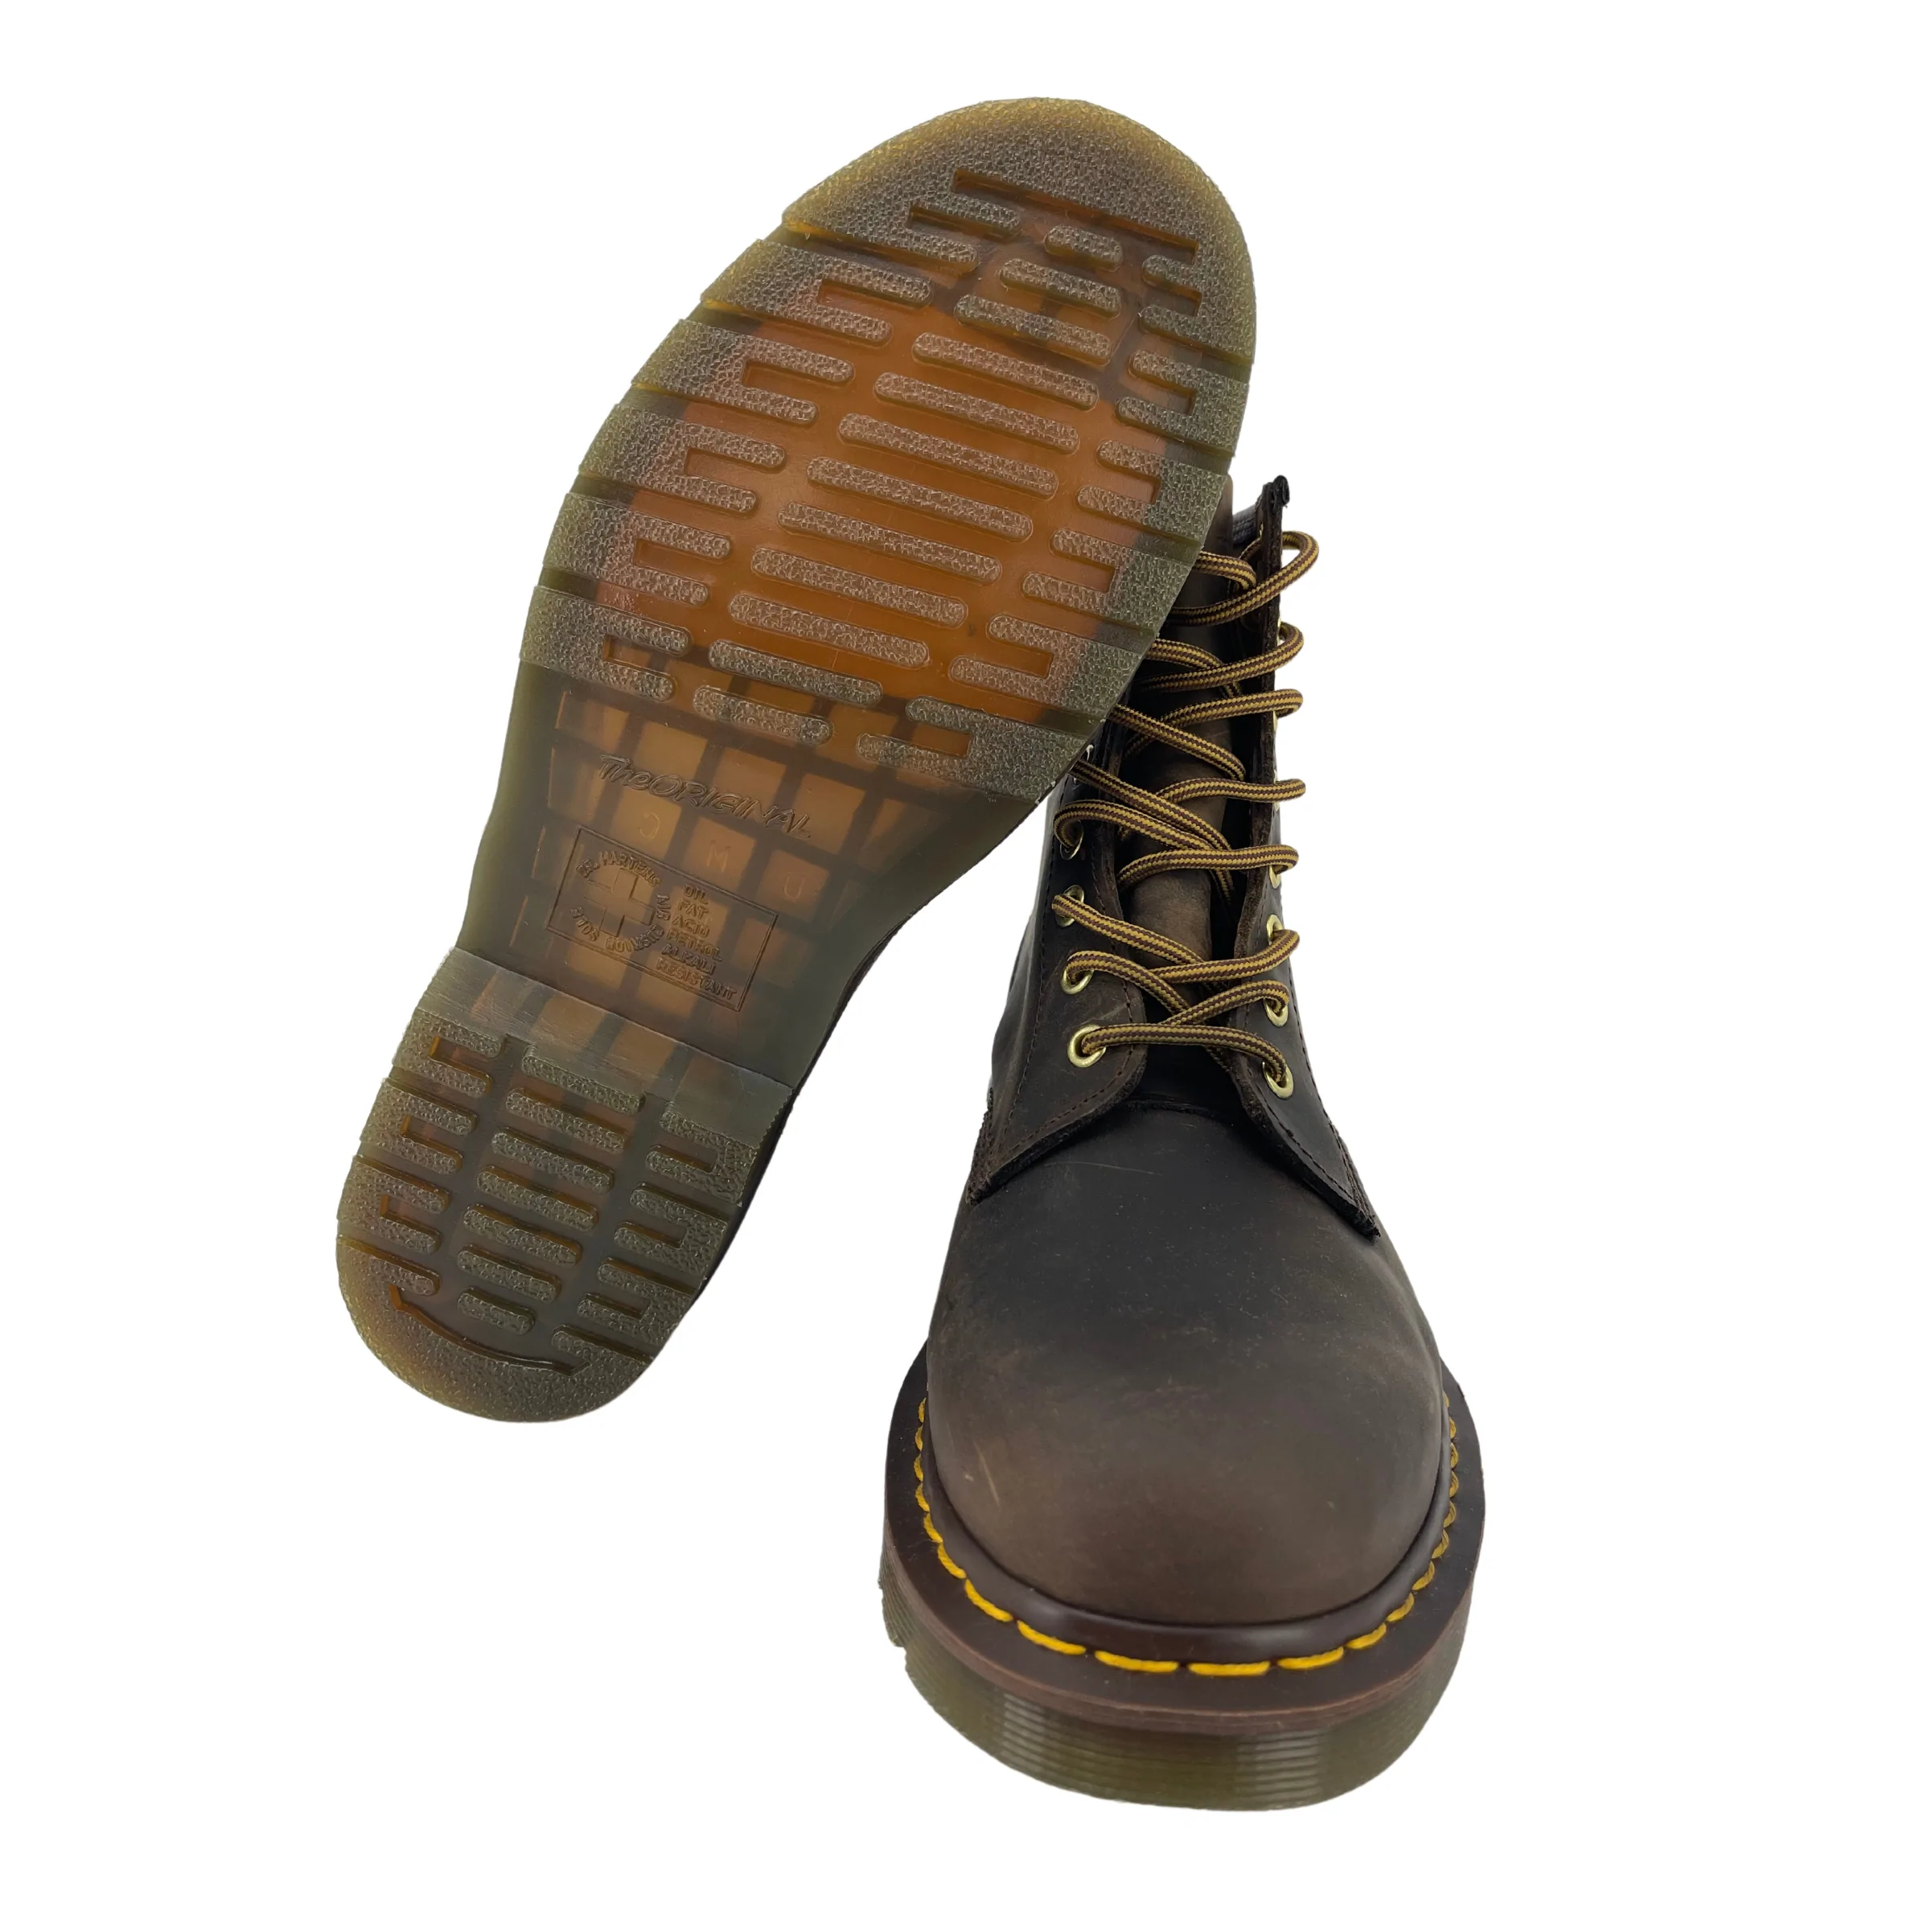 Dr Martens Unisex Crazy Horse Boots / Brown / Lace Up Combat Boots / Size 11